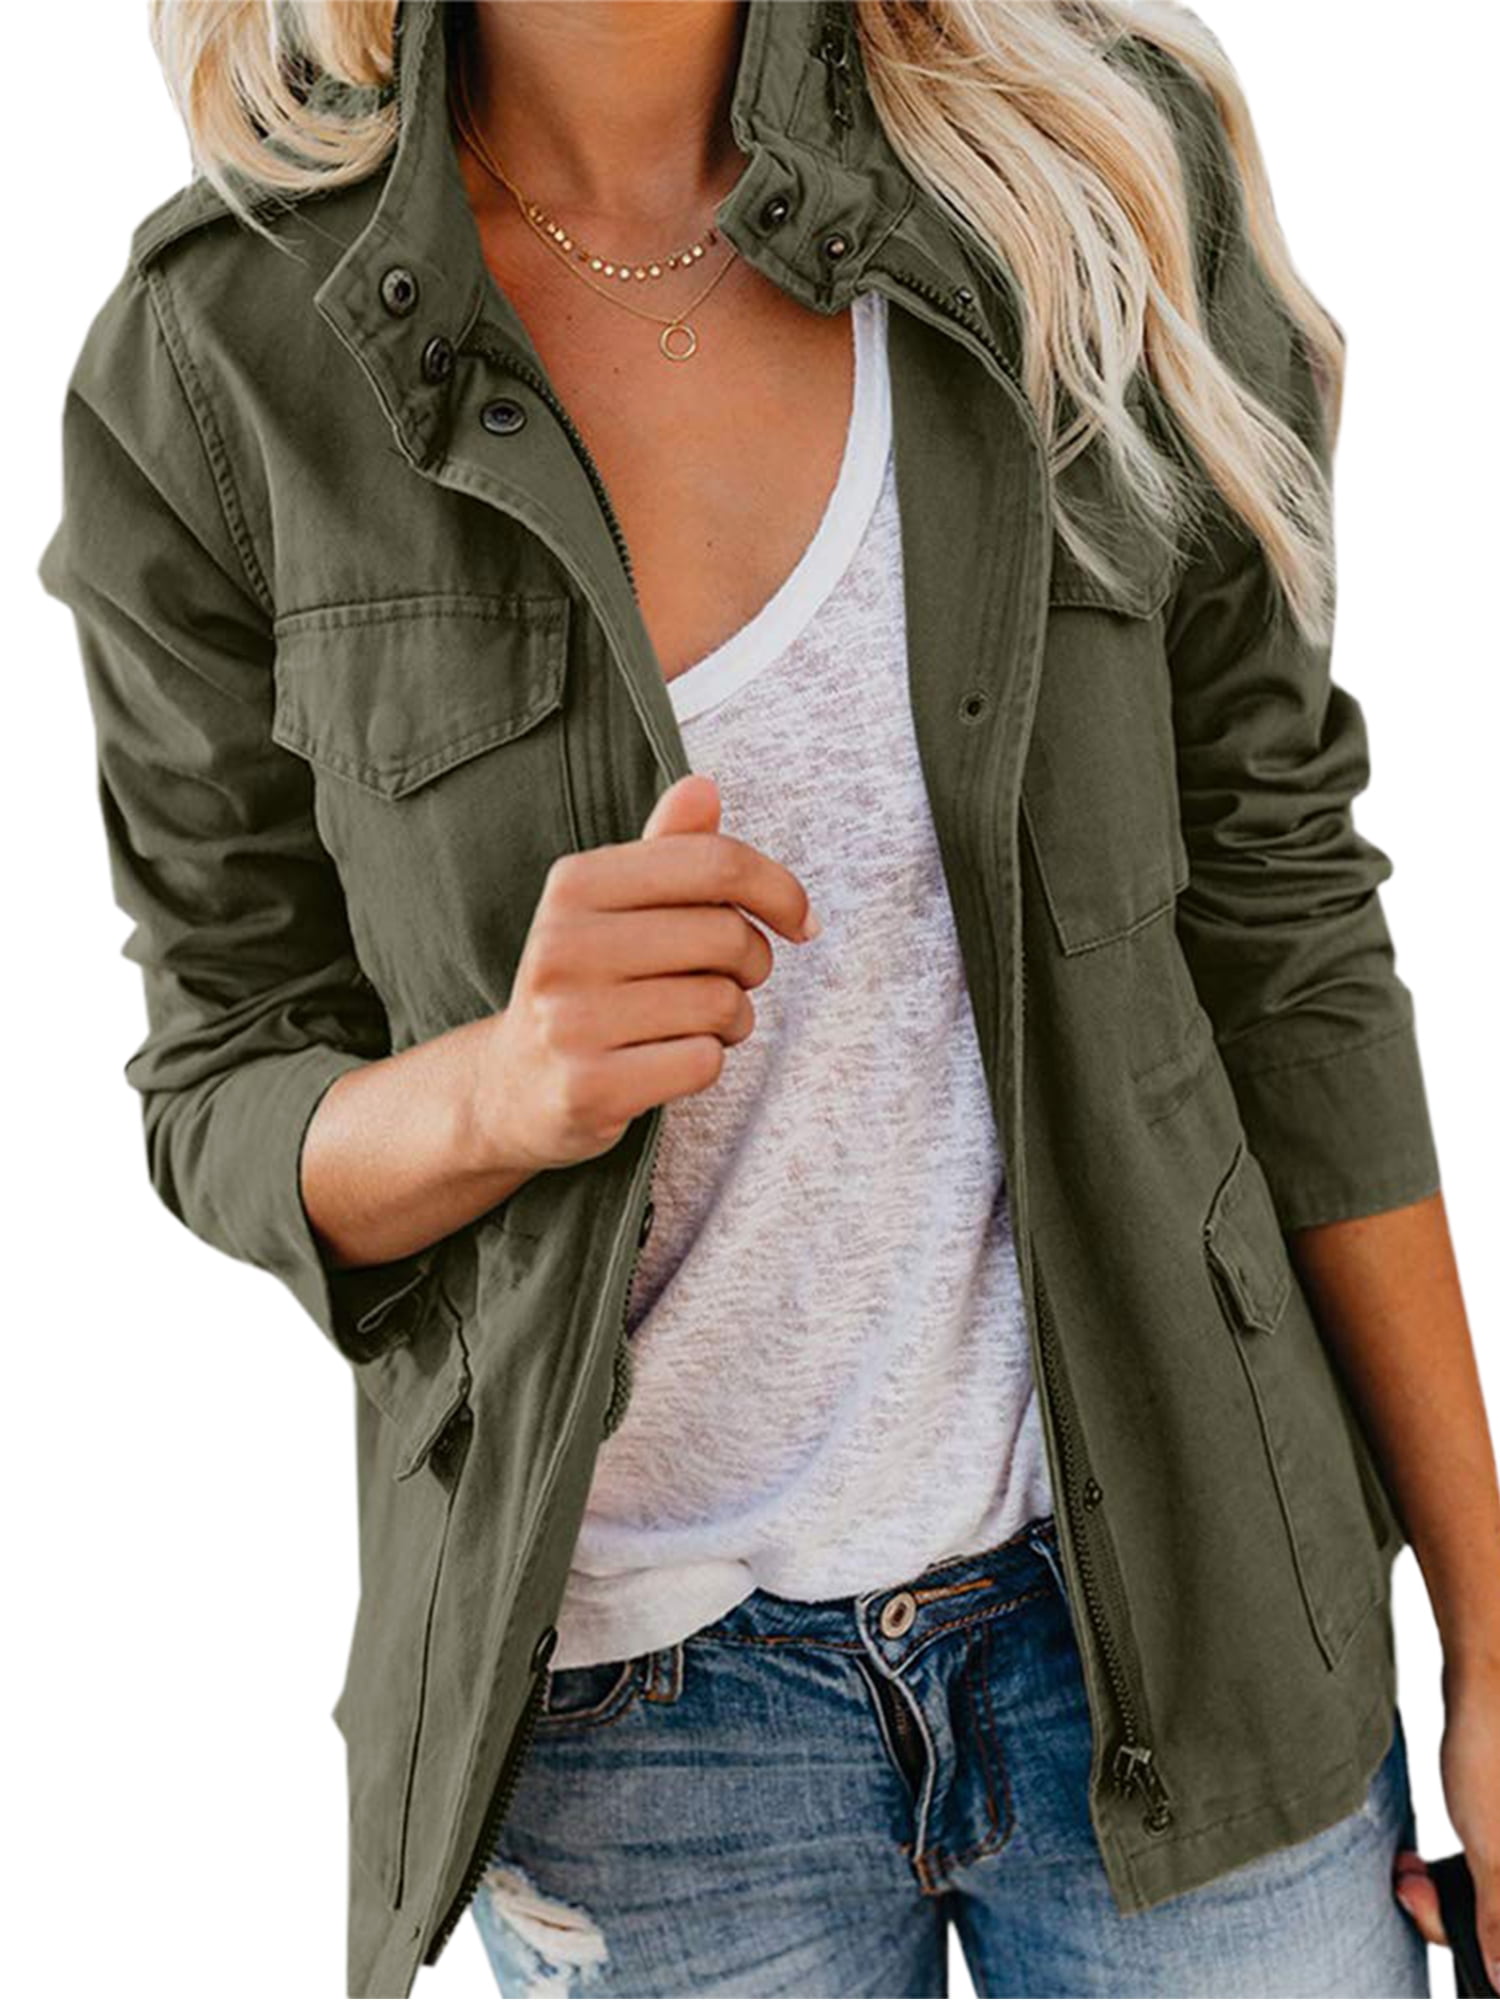 Grianlook Ladies Outwear Solid Color Military Jacket Long Sleeve Coat Women  Streetwear Utility Jackets Plain Lapel Army Green S